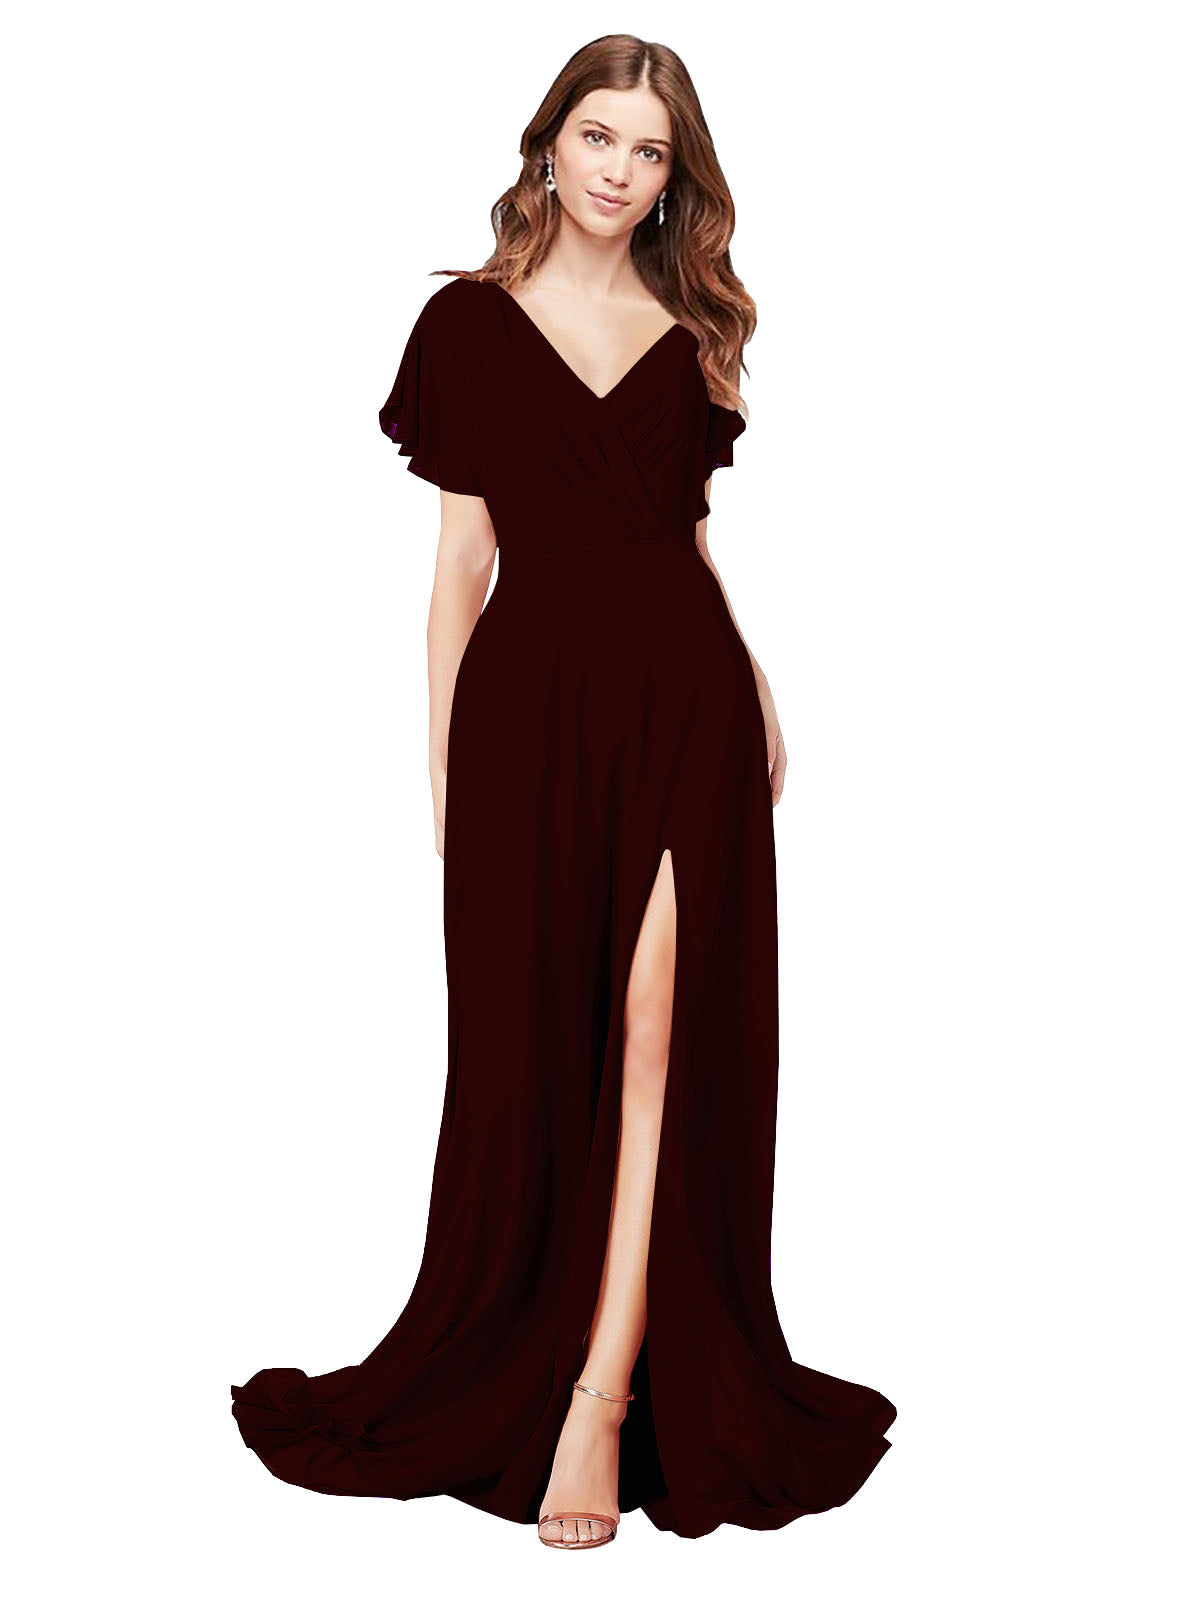 RightBrides Marisol Burgundy Gold A-Line V-Neck Cap Sleeves Long Bridesmaid Dress